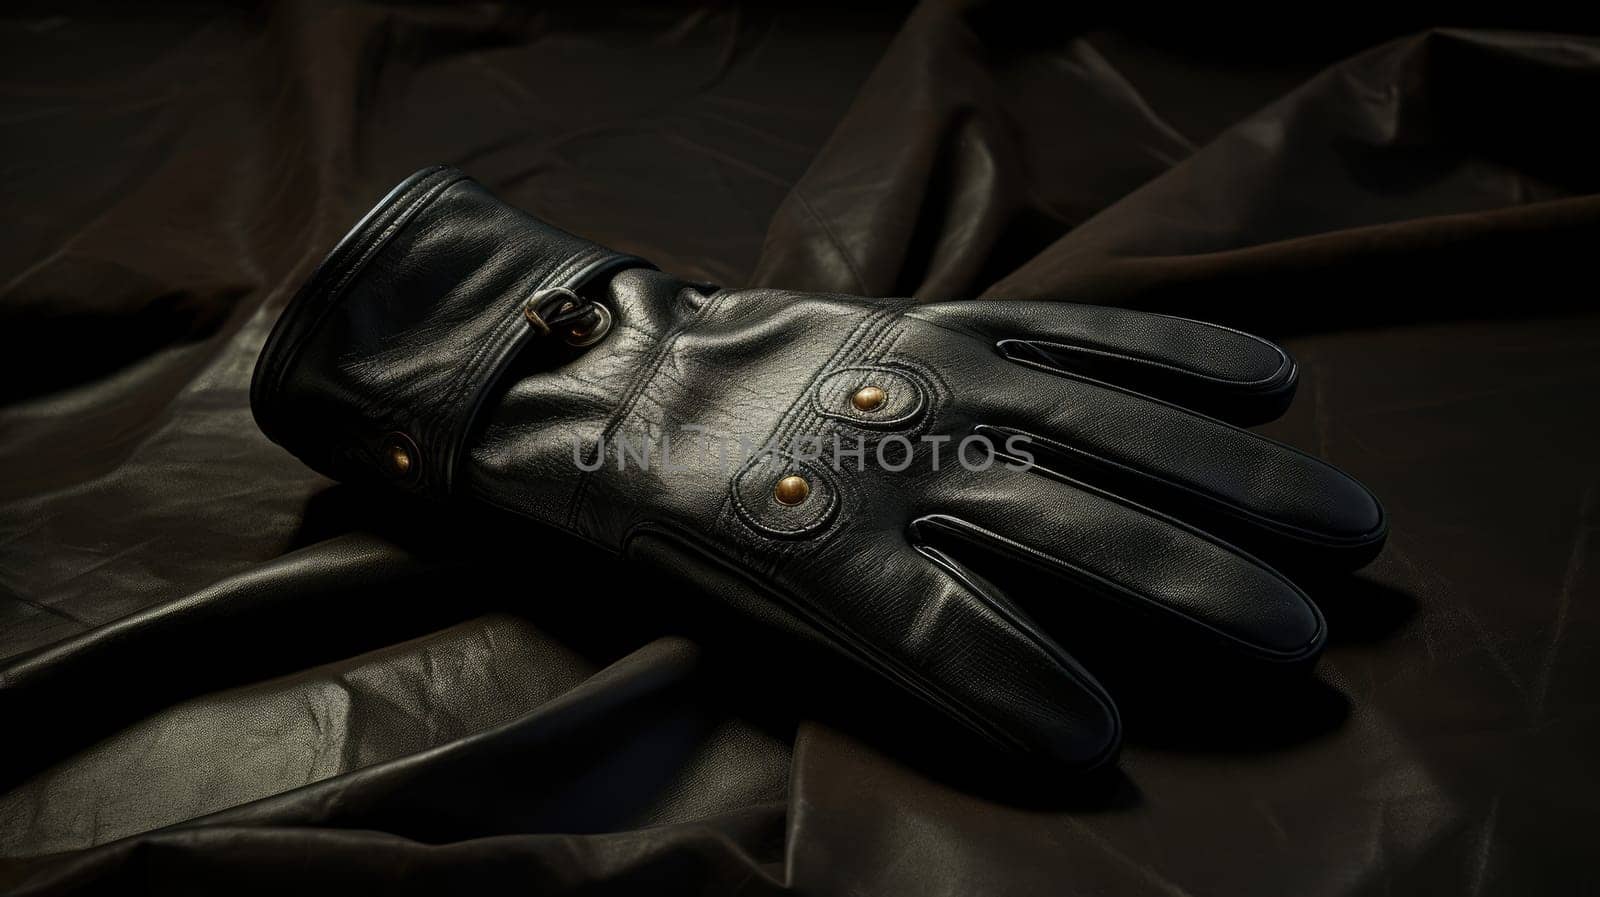 Black leather gloves on dark background. AI